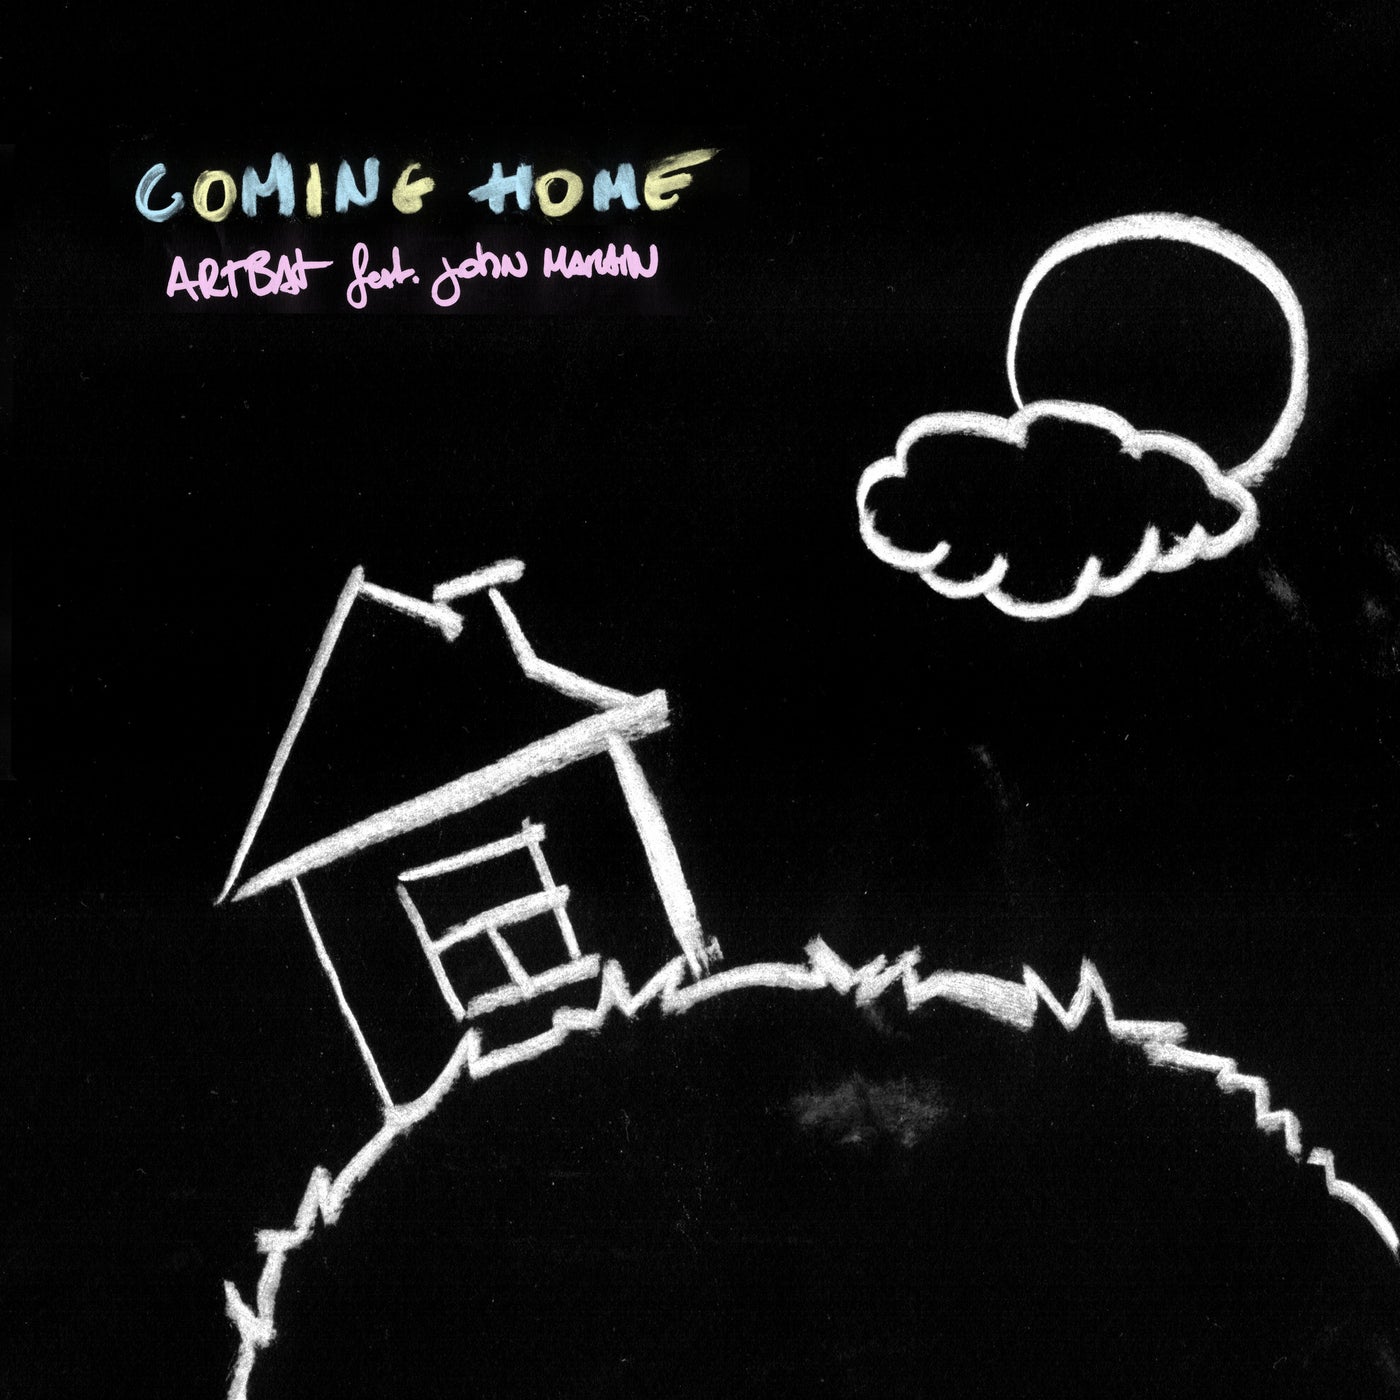 ARTBAT featuring John Martin — Coming Home cover artwork